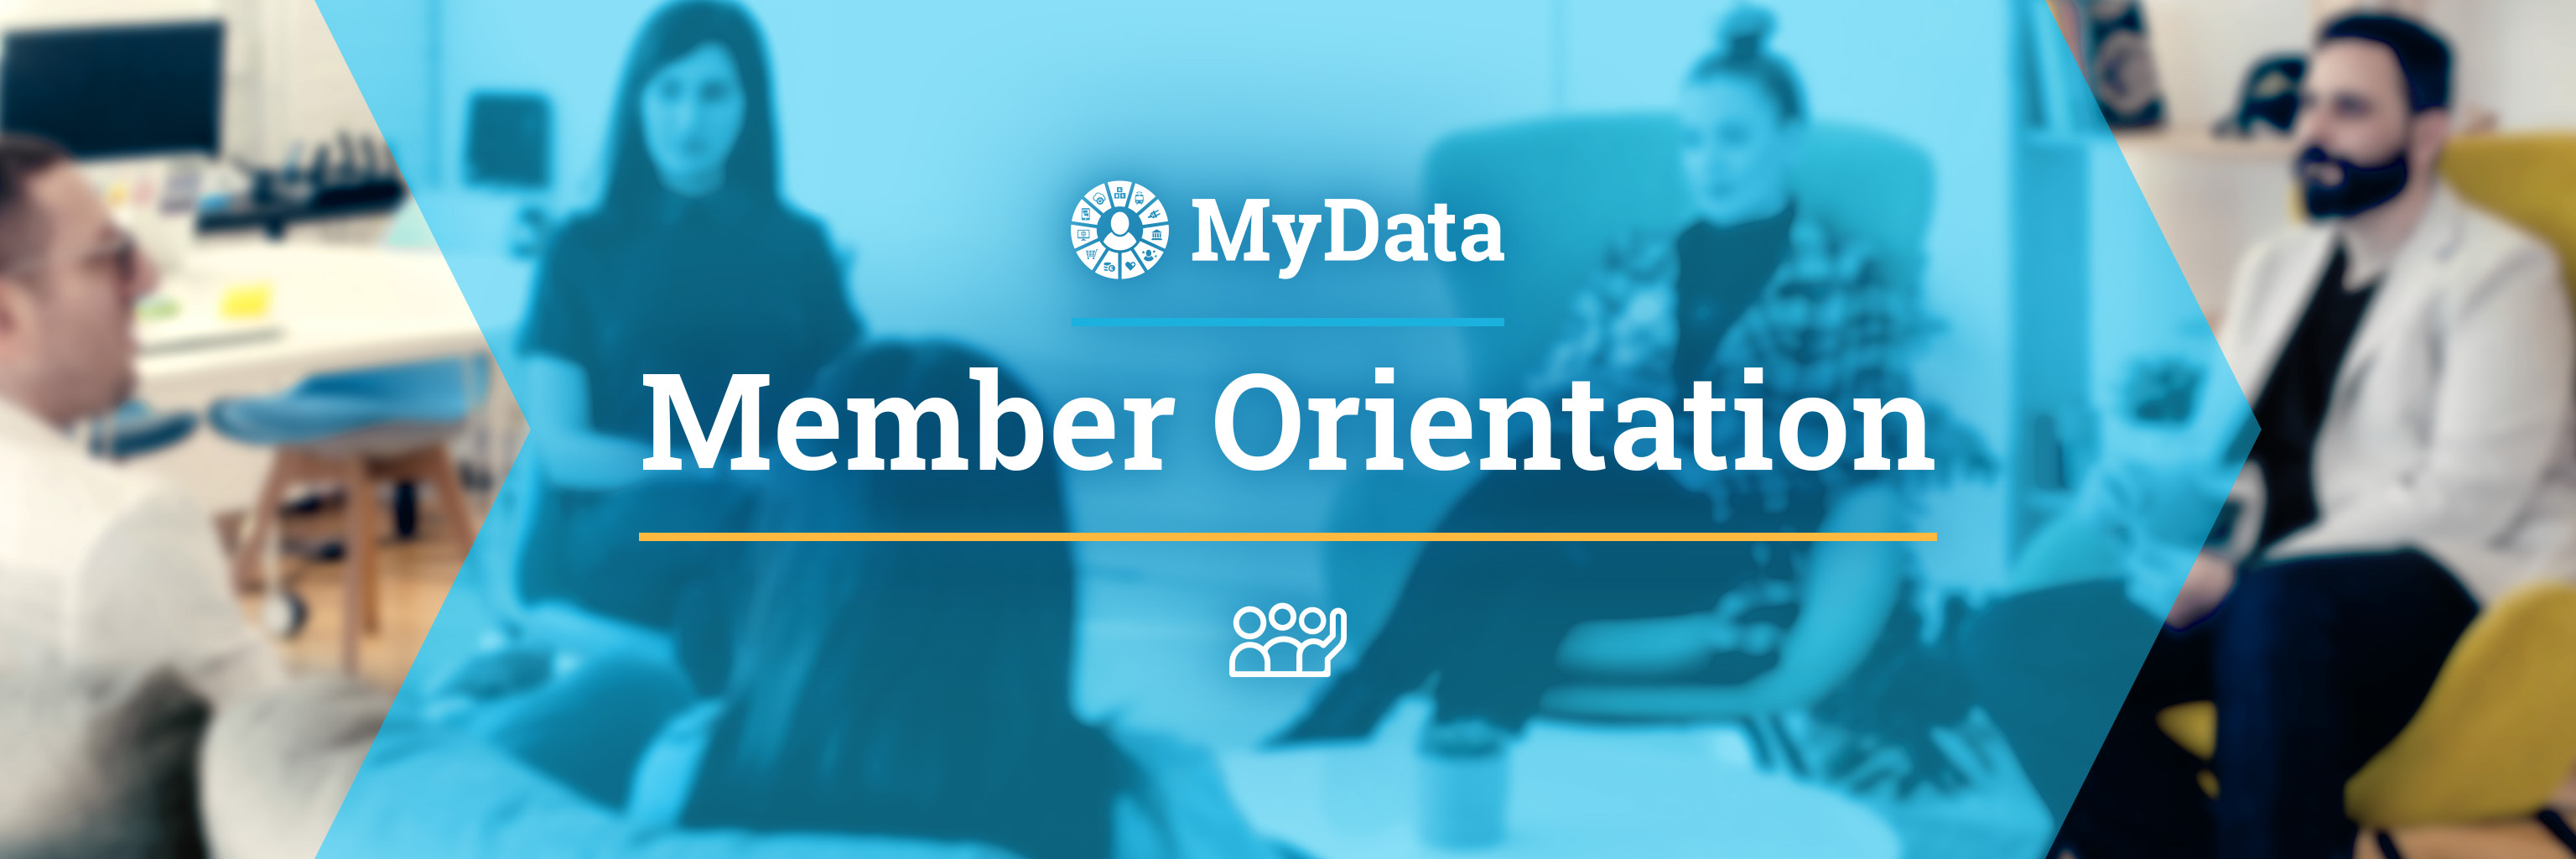 MyData Member Orientation Banner (1)